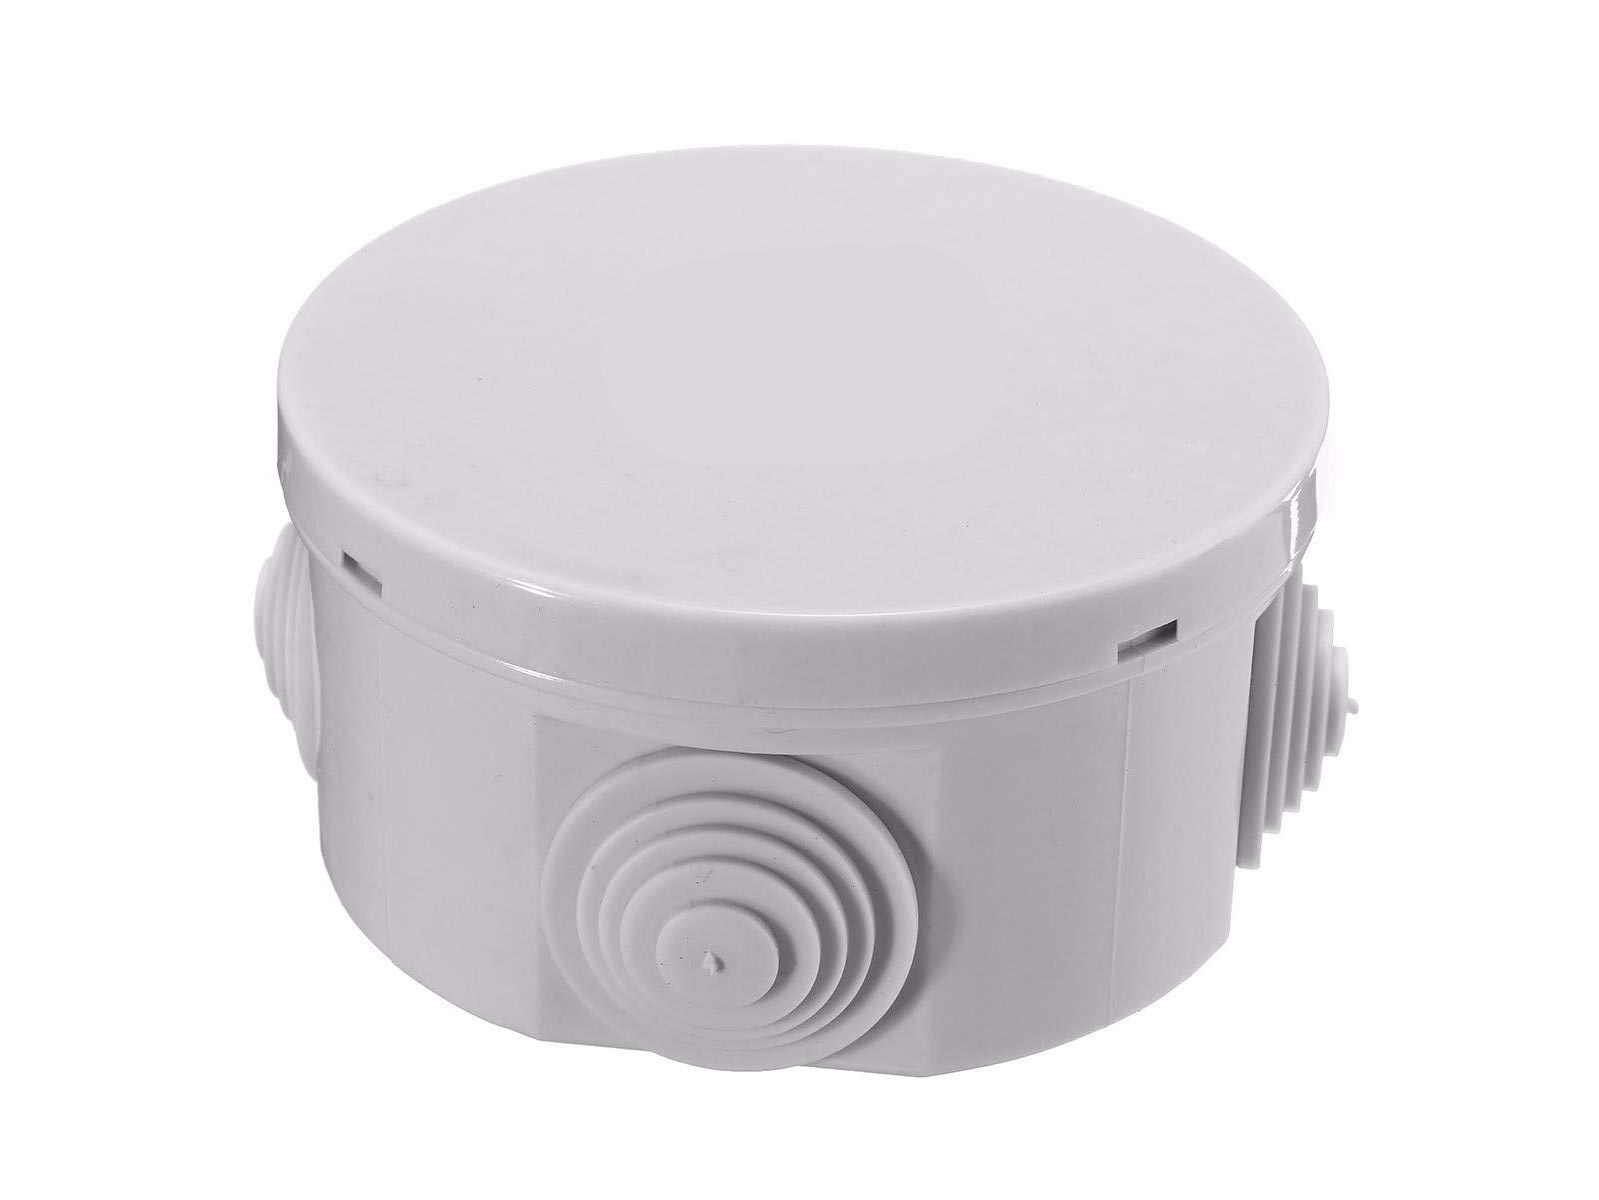 ESR R065 65mm x 35mm IP44 Electrical Junction Box Round Empty Enclosure Grommets CCTV Cable Connection